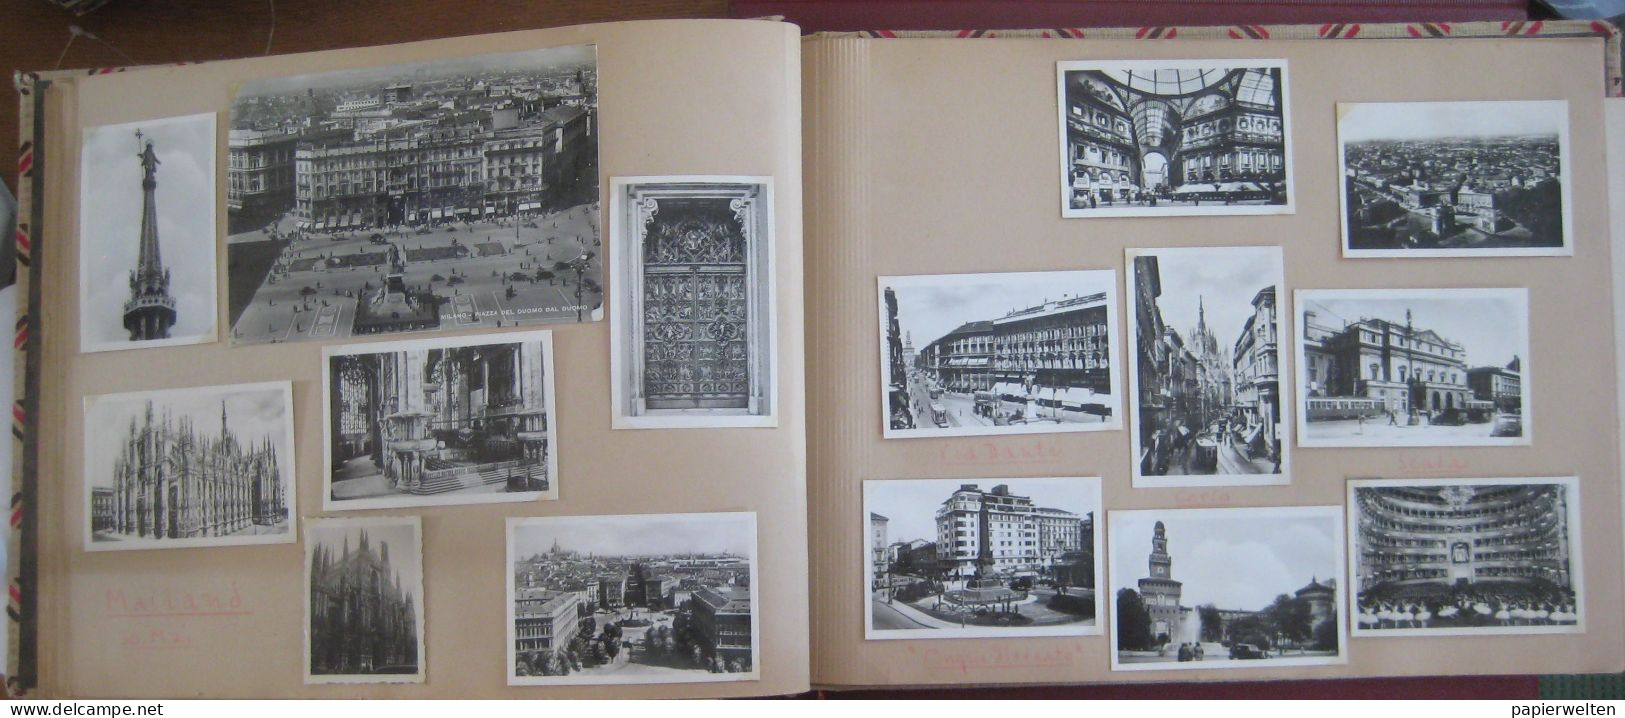 Fotoalbum "Italienreise 1950" (Venezia, Firenze, Roma, Napoli, Pompej, Capri, Genova, Milano, Cannes) Papstaudienz